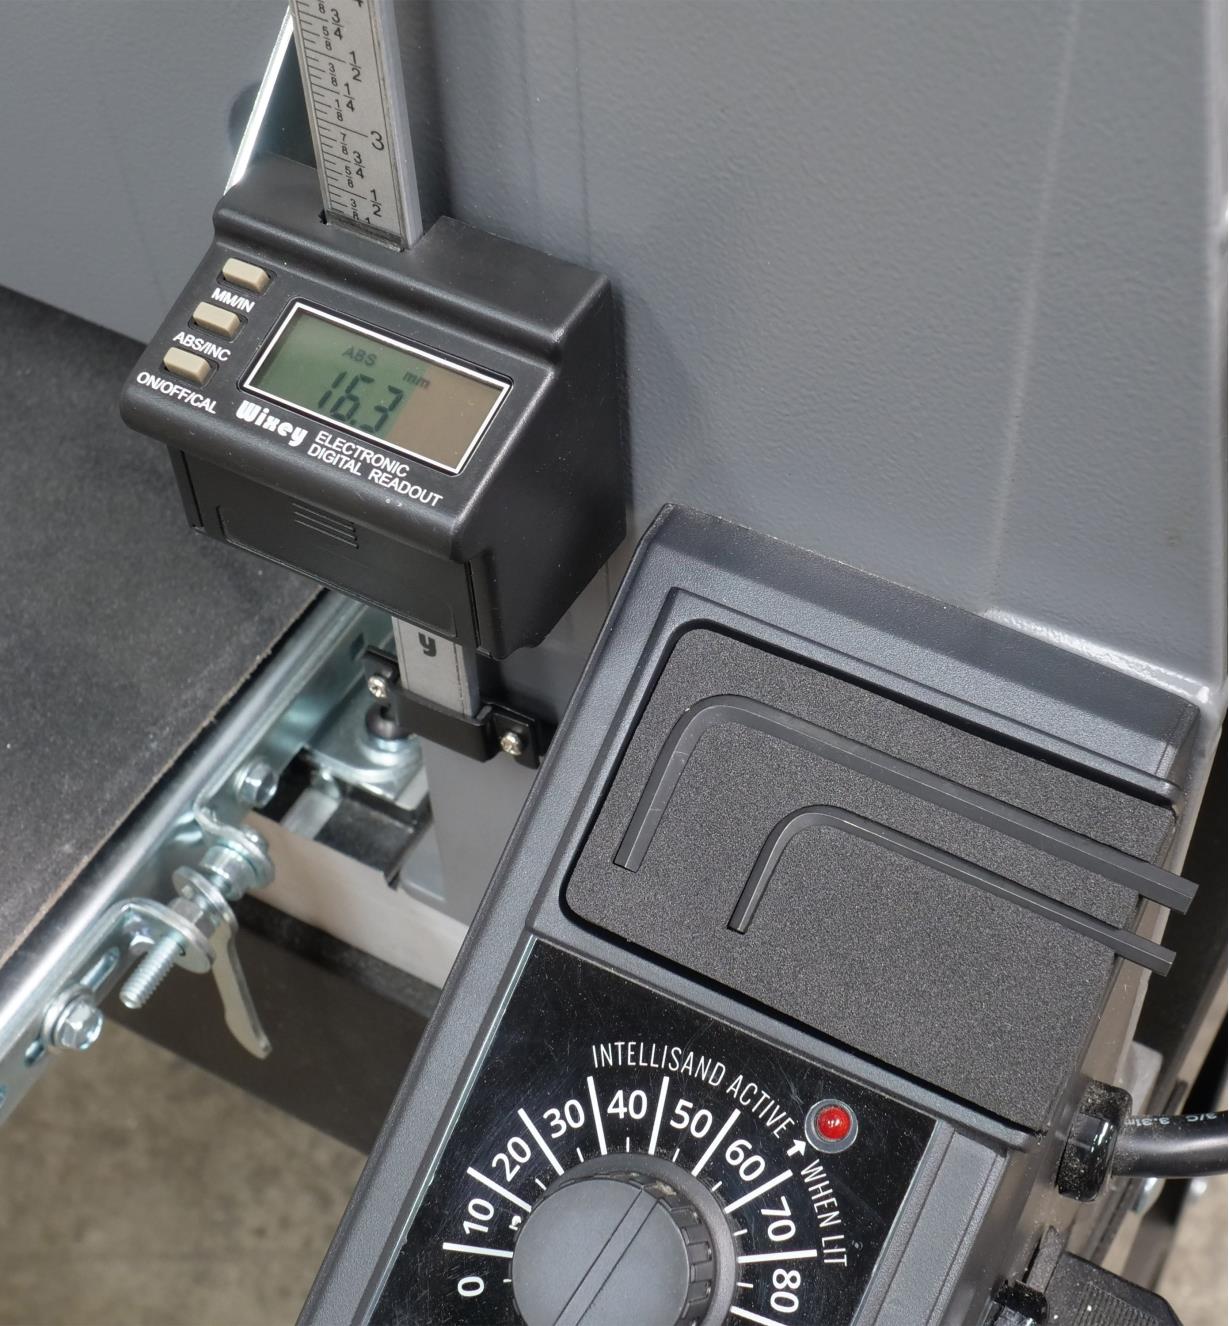 The digital depth gauge and control panel on the 16-32 drum sander